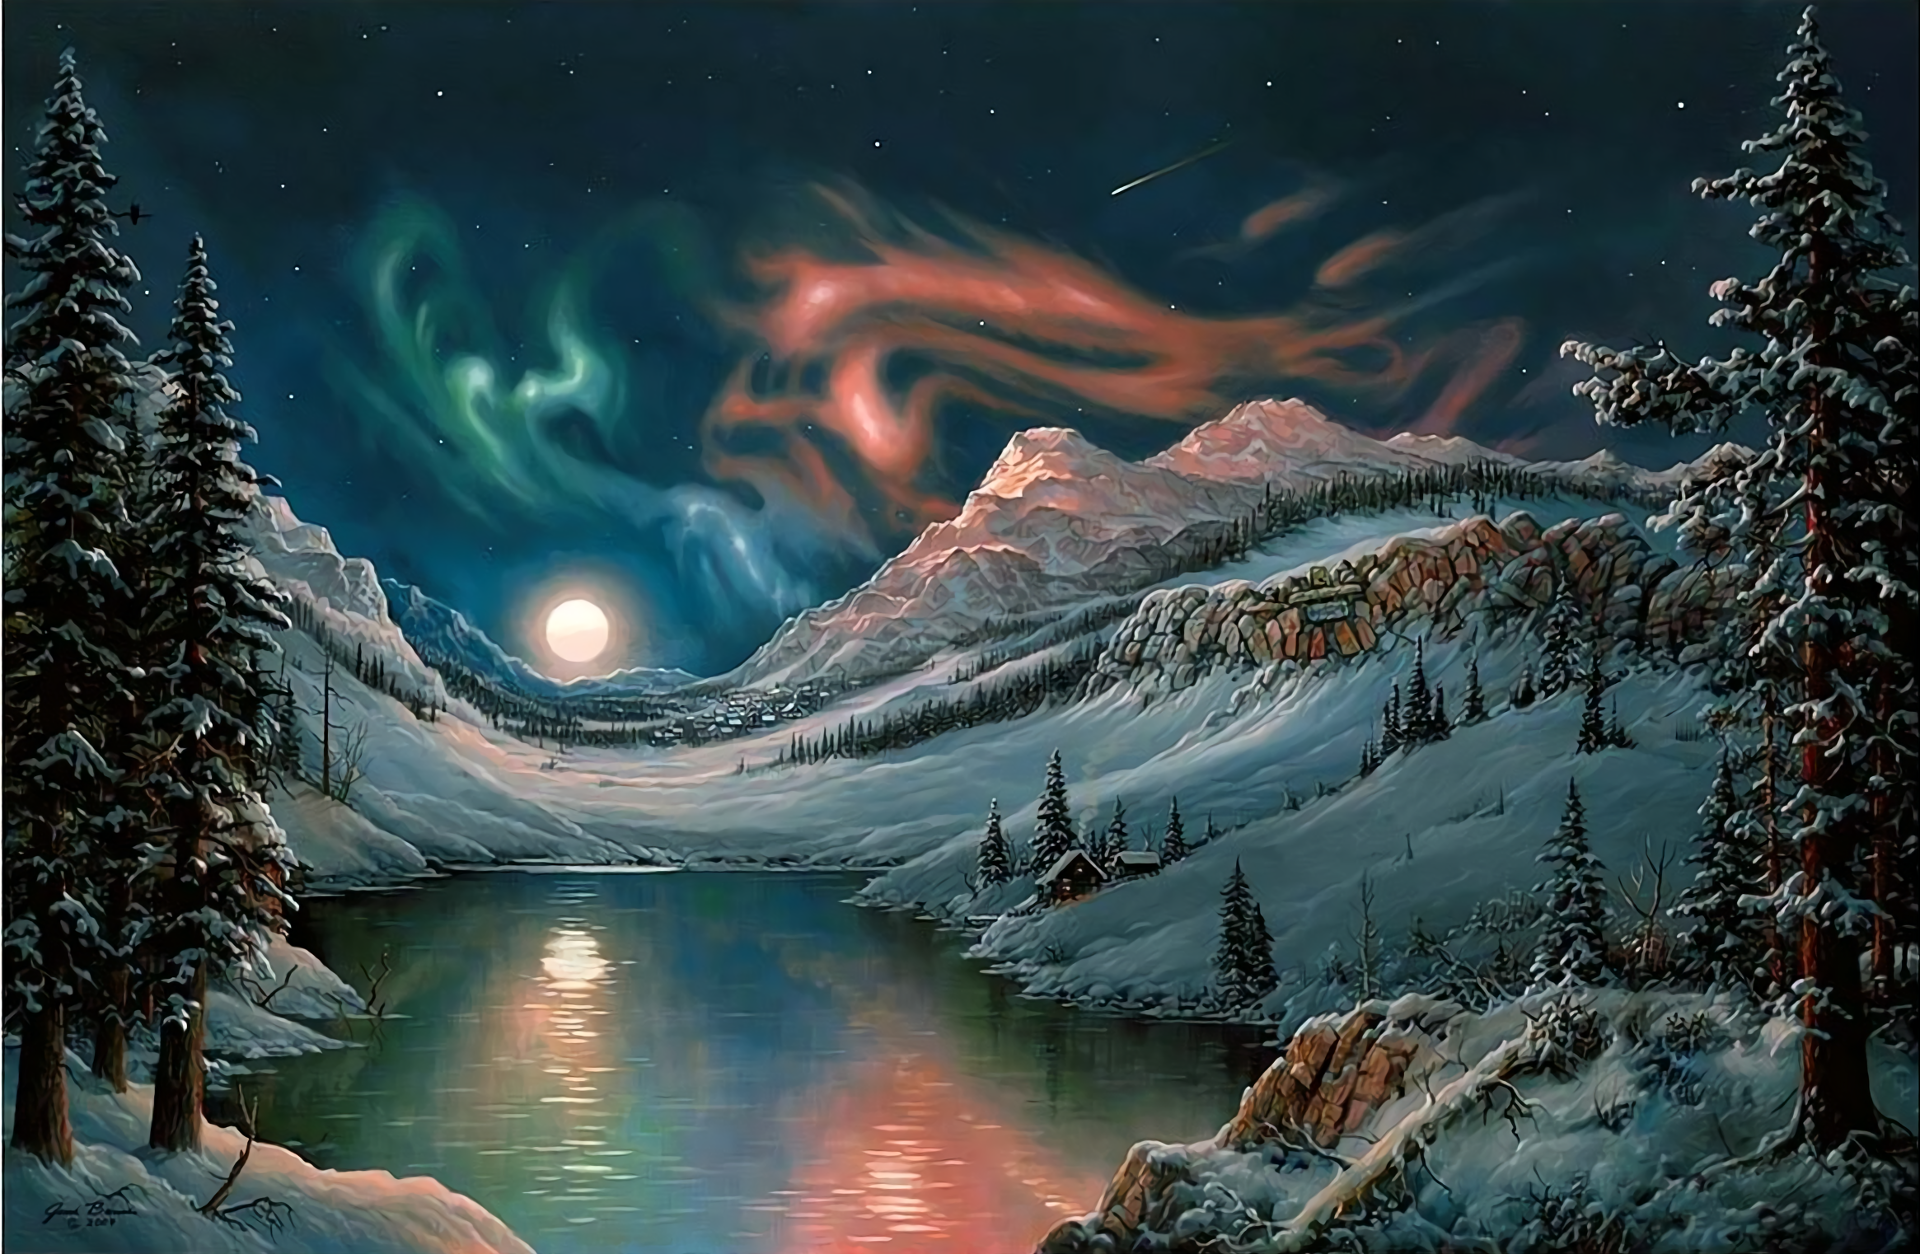 Winter Night by Jesse Barnes